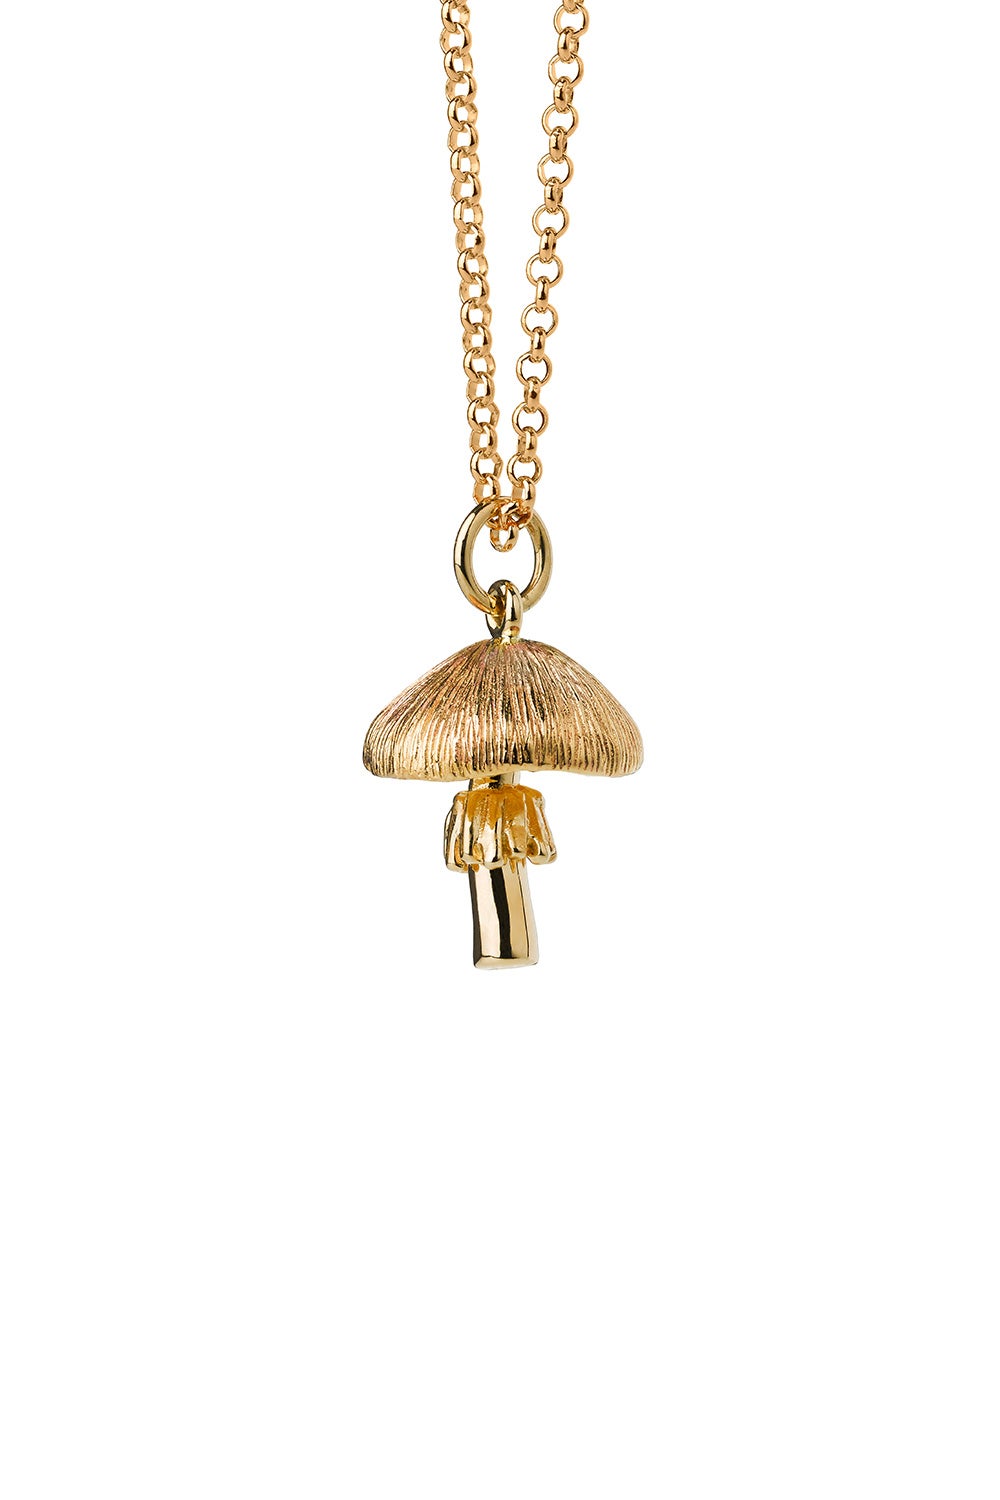 The Mushroom Lover Necklace - Rondel